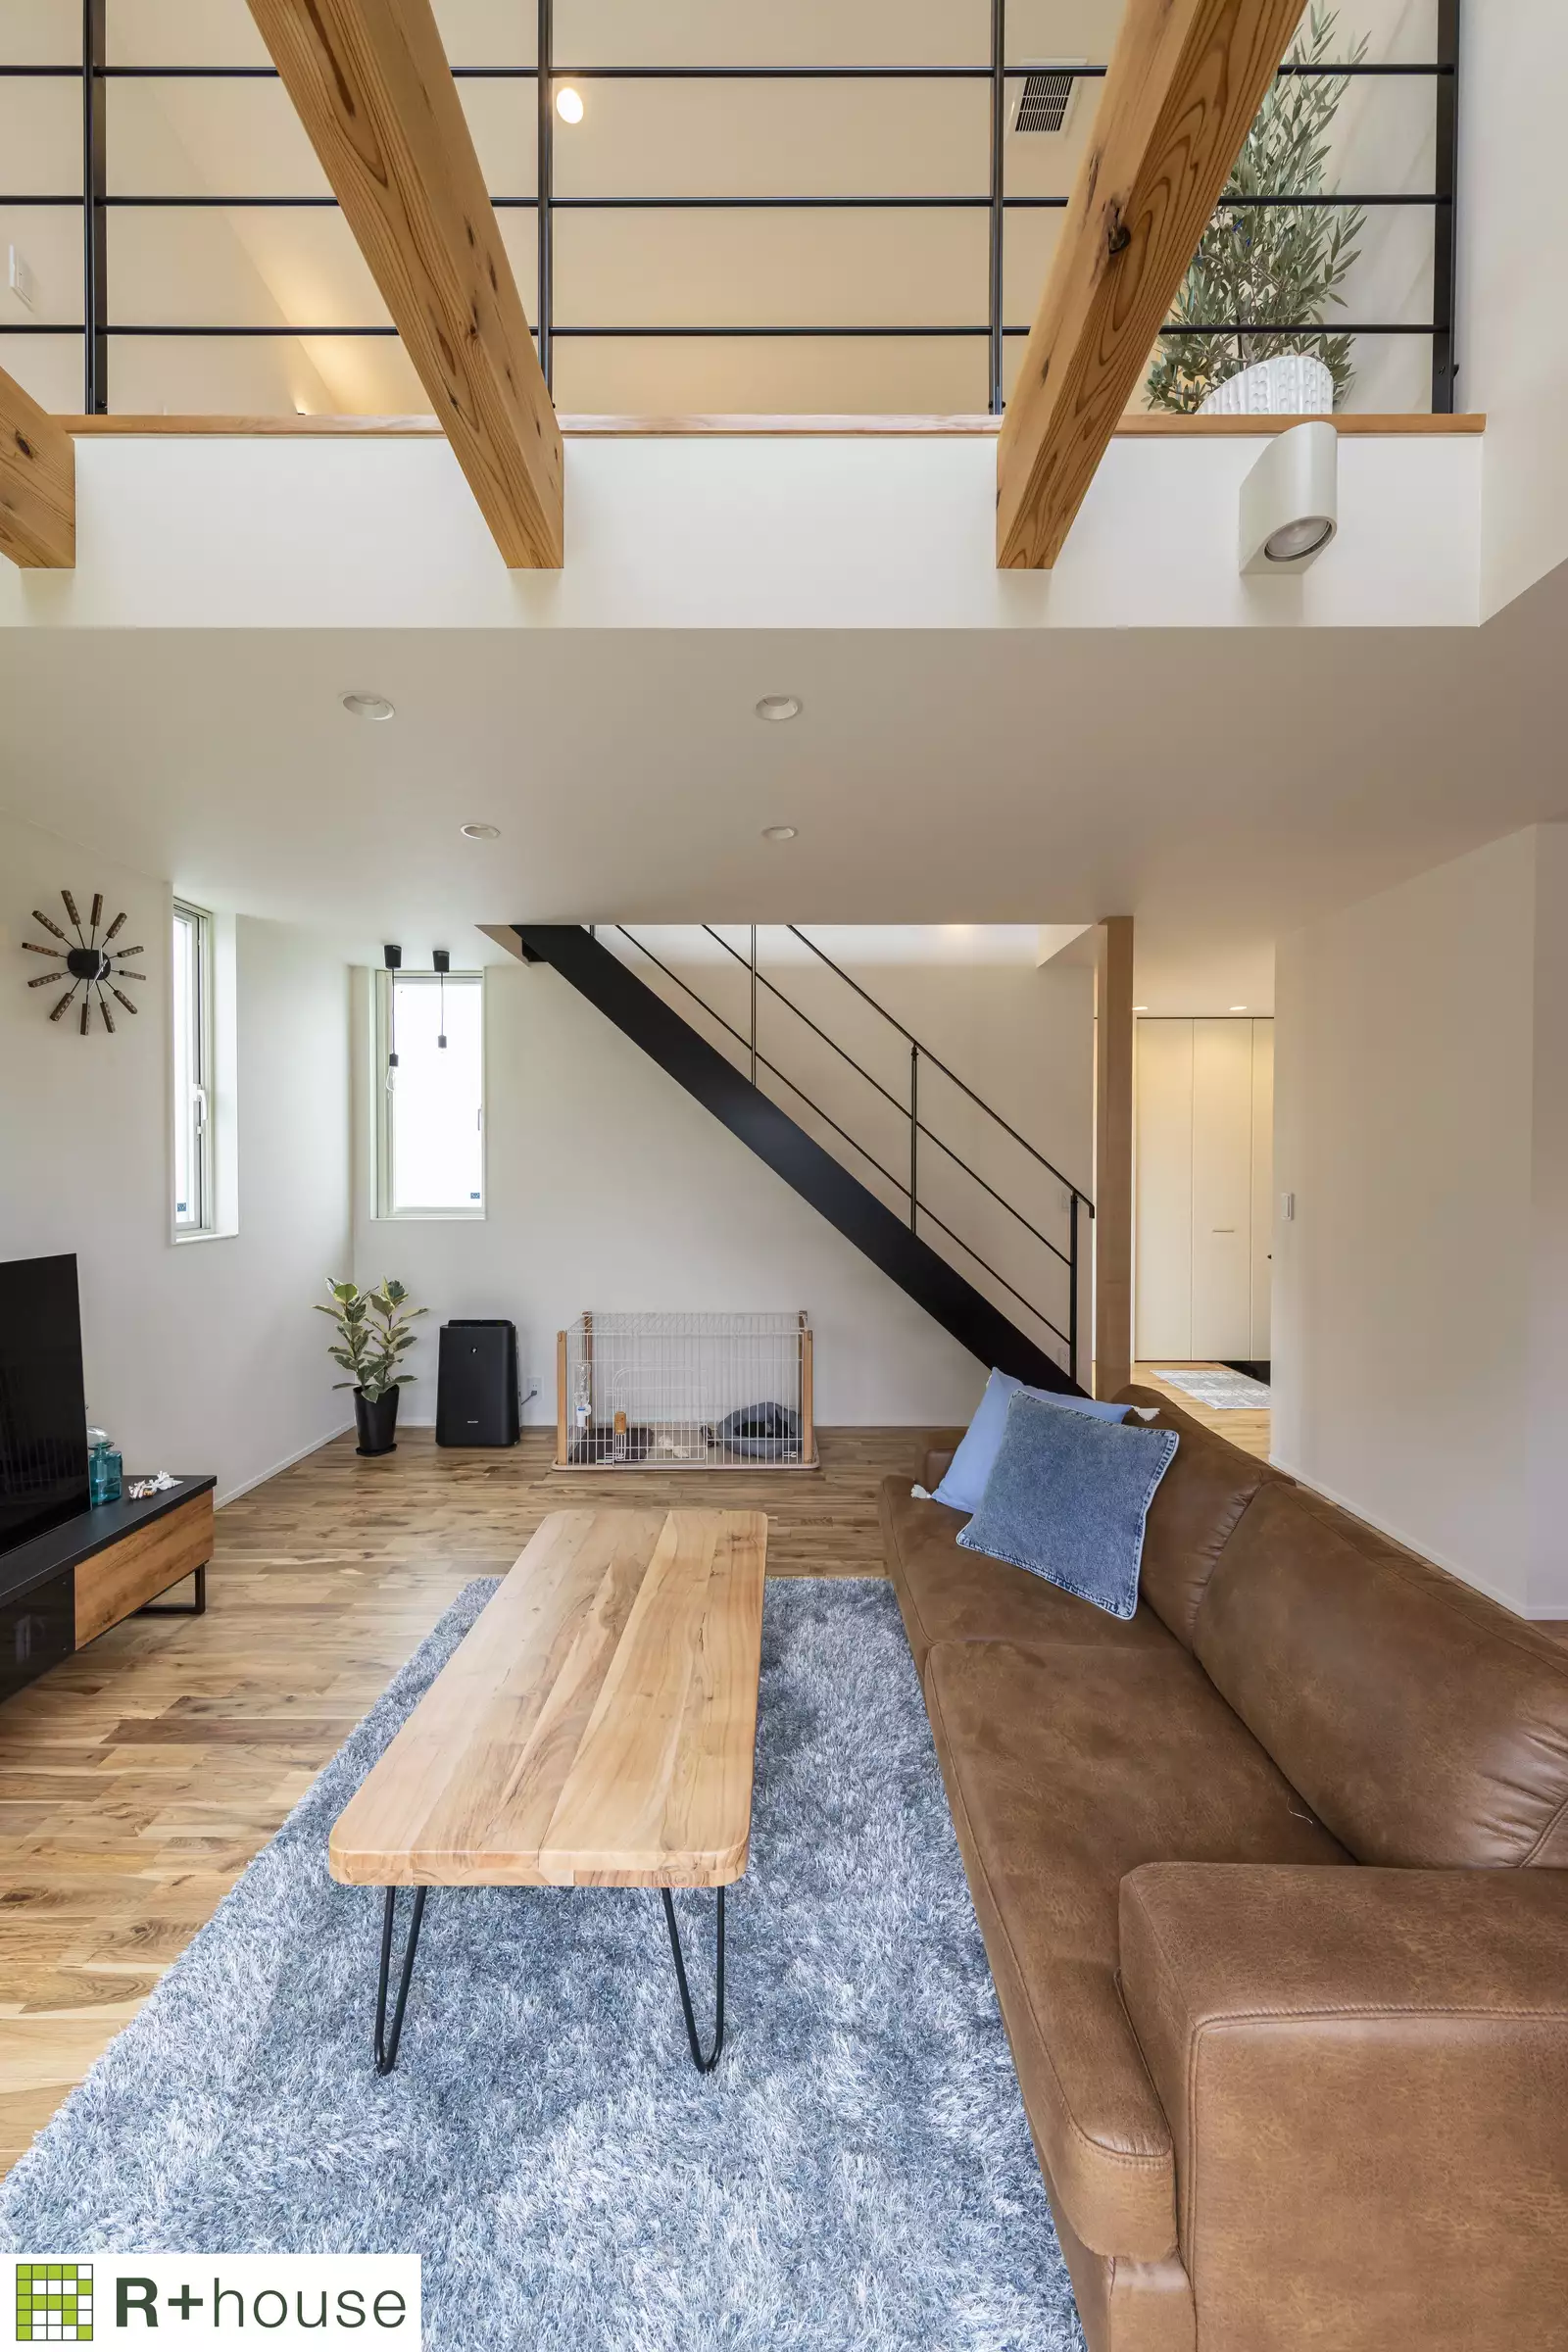 R+houseの物件のリビング写真です。ソファにローテーブル、グレーの絨毯、奥に二階へ続く階段が見えます。